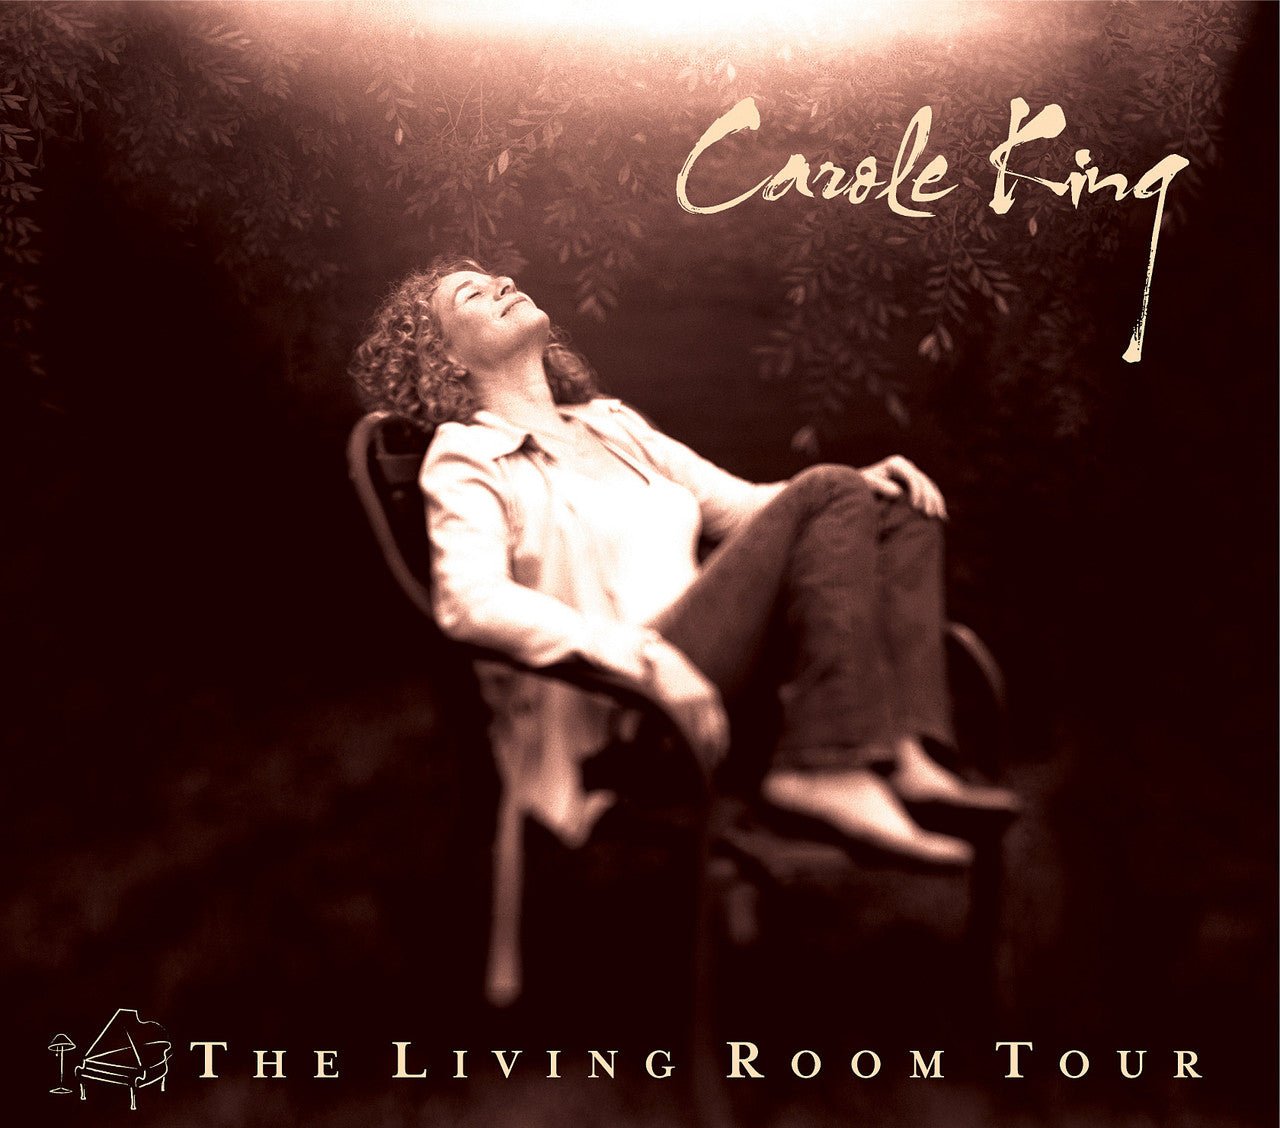 KING,CAROLE - LIVING ROOM TOUR Vinyl LP